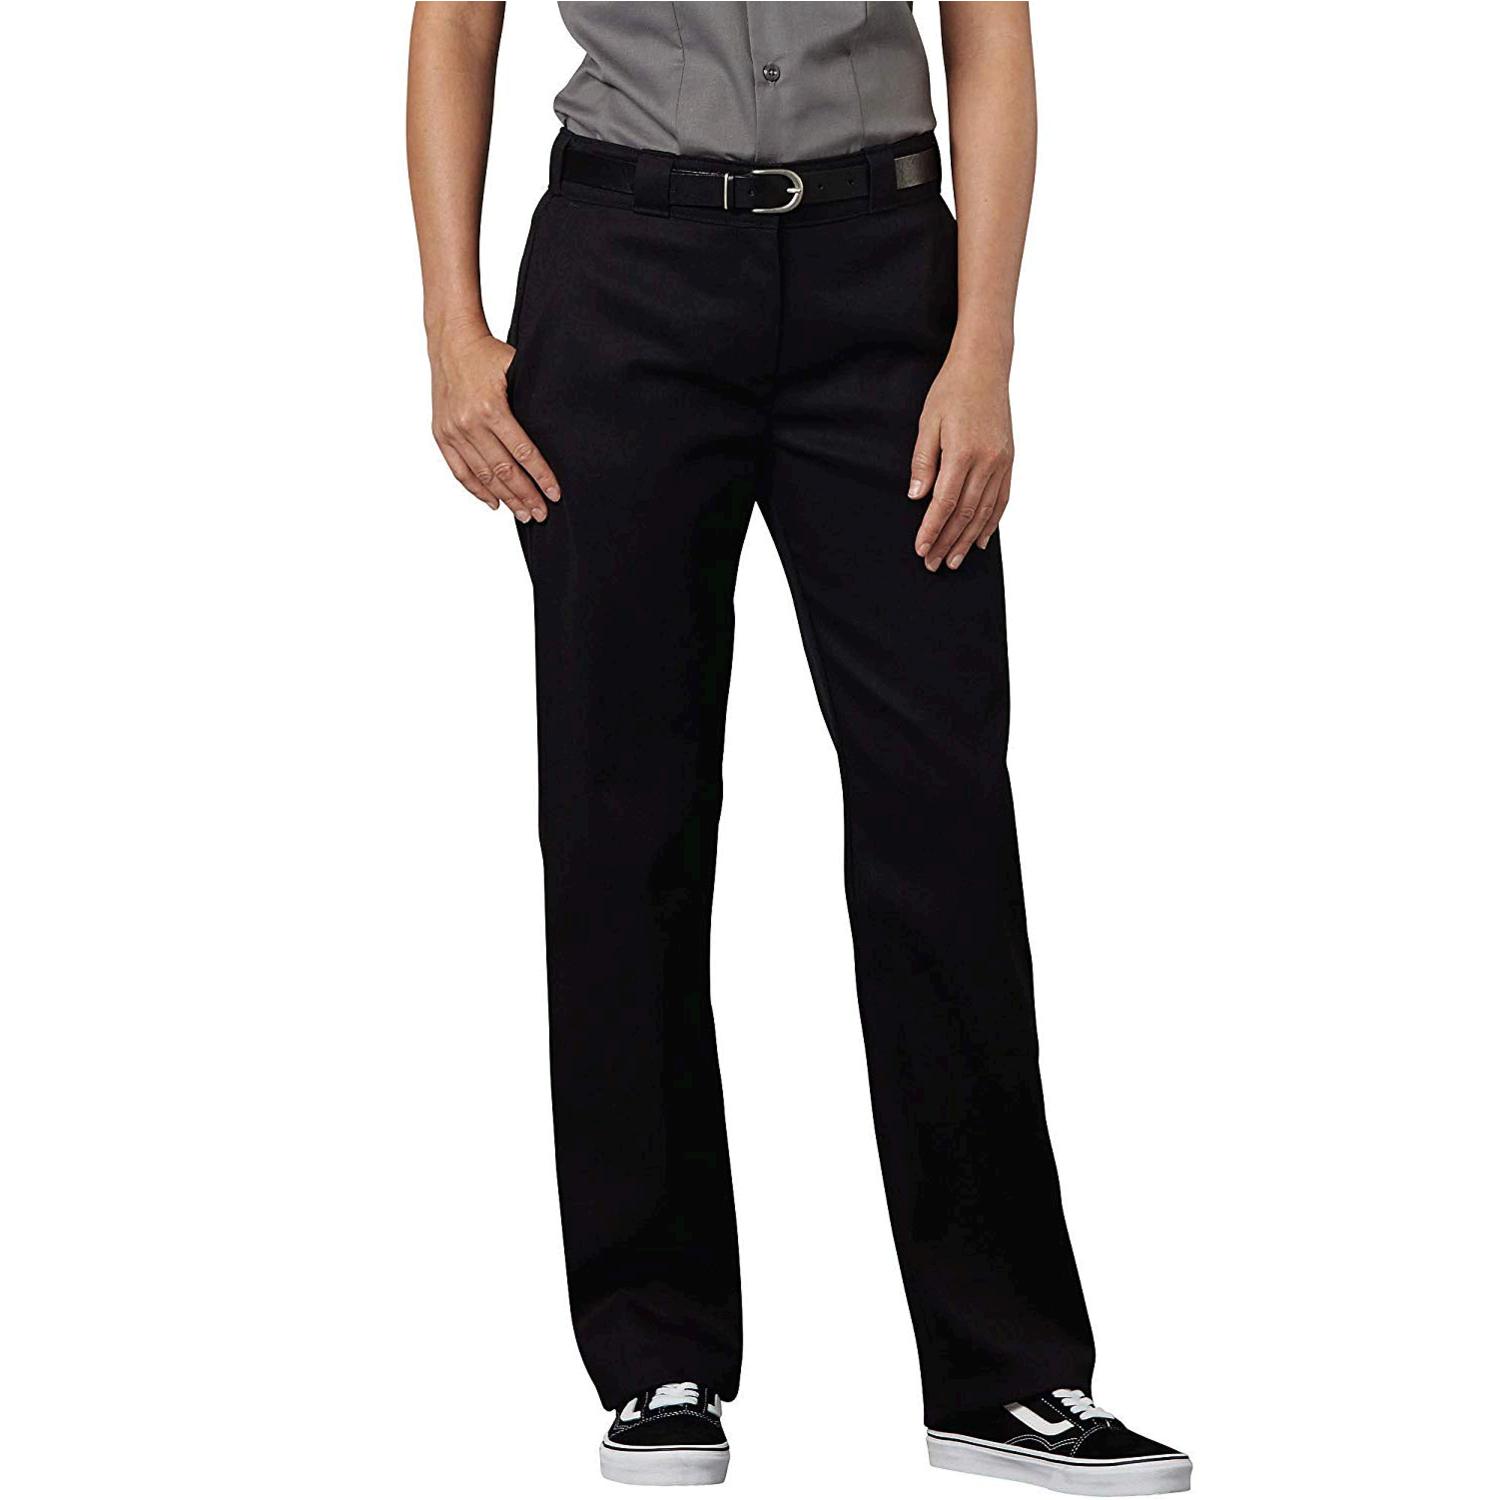 Dickies Women's Flex Original Fit Work Pants, Black, 16, Black, Size 16.0 jVTv | eBay